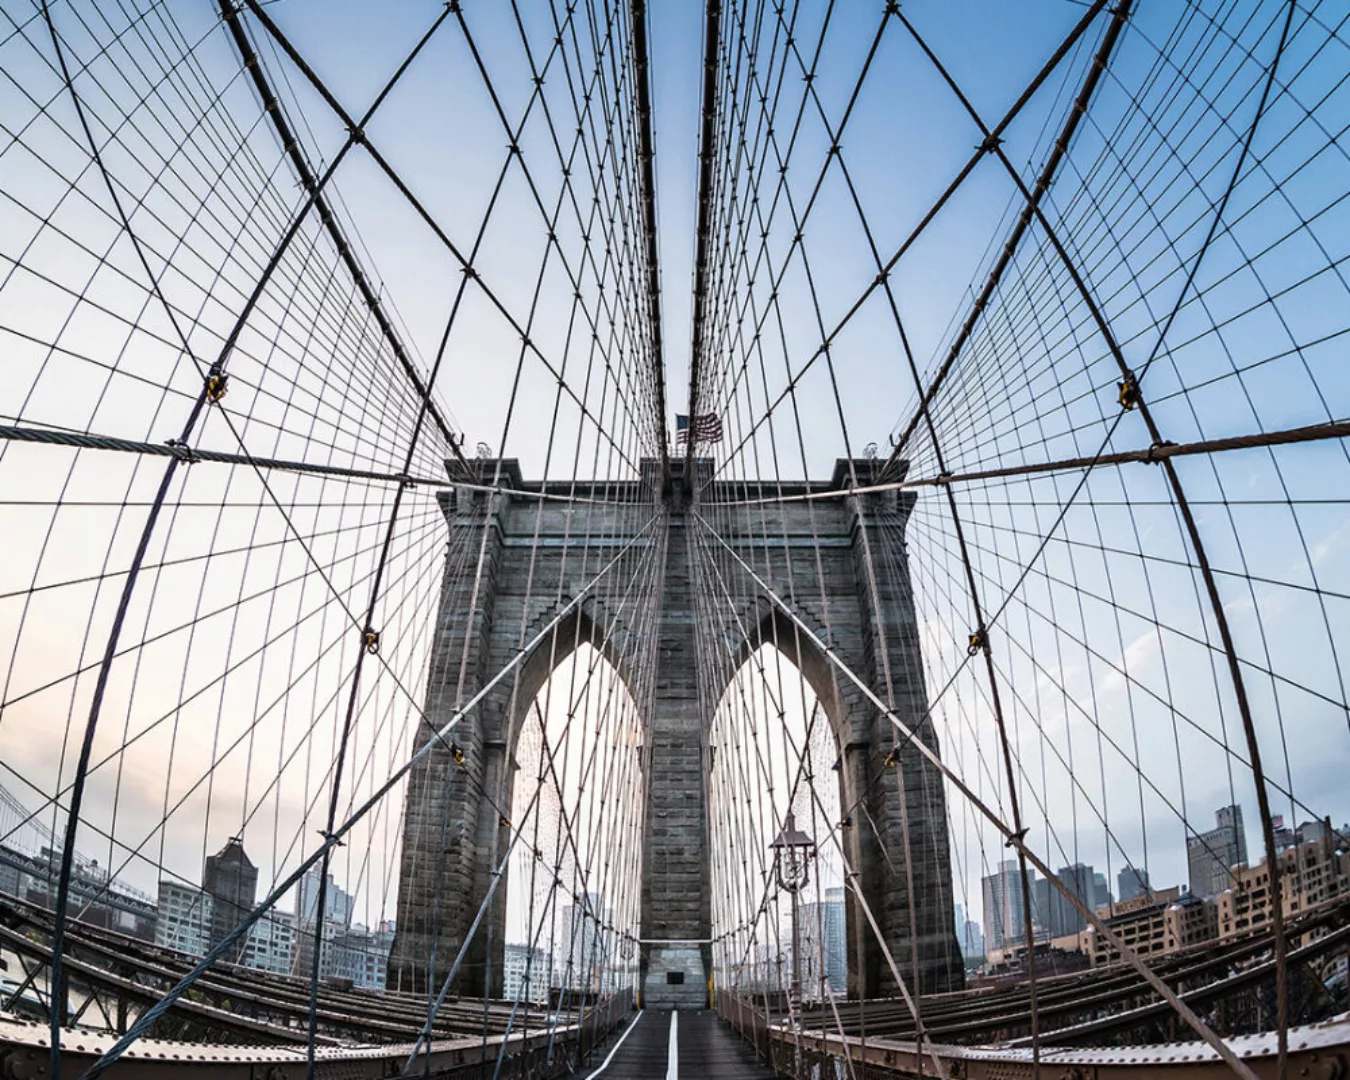 Fototapete "Brooklyn Bridge" 4,00x2,70 m / Glattvlies Brillant günstig online kaufen